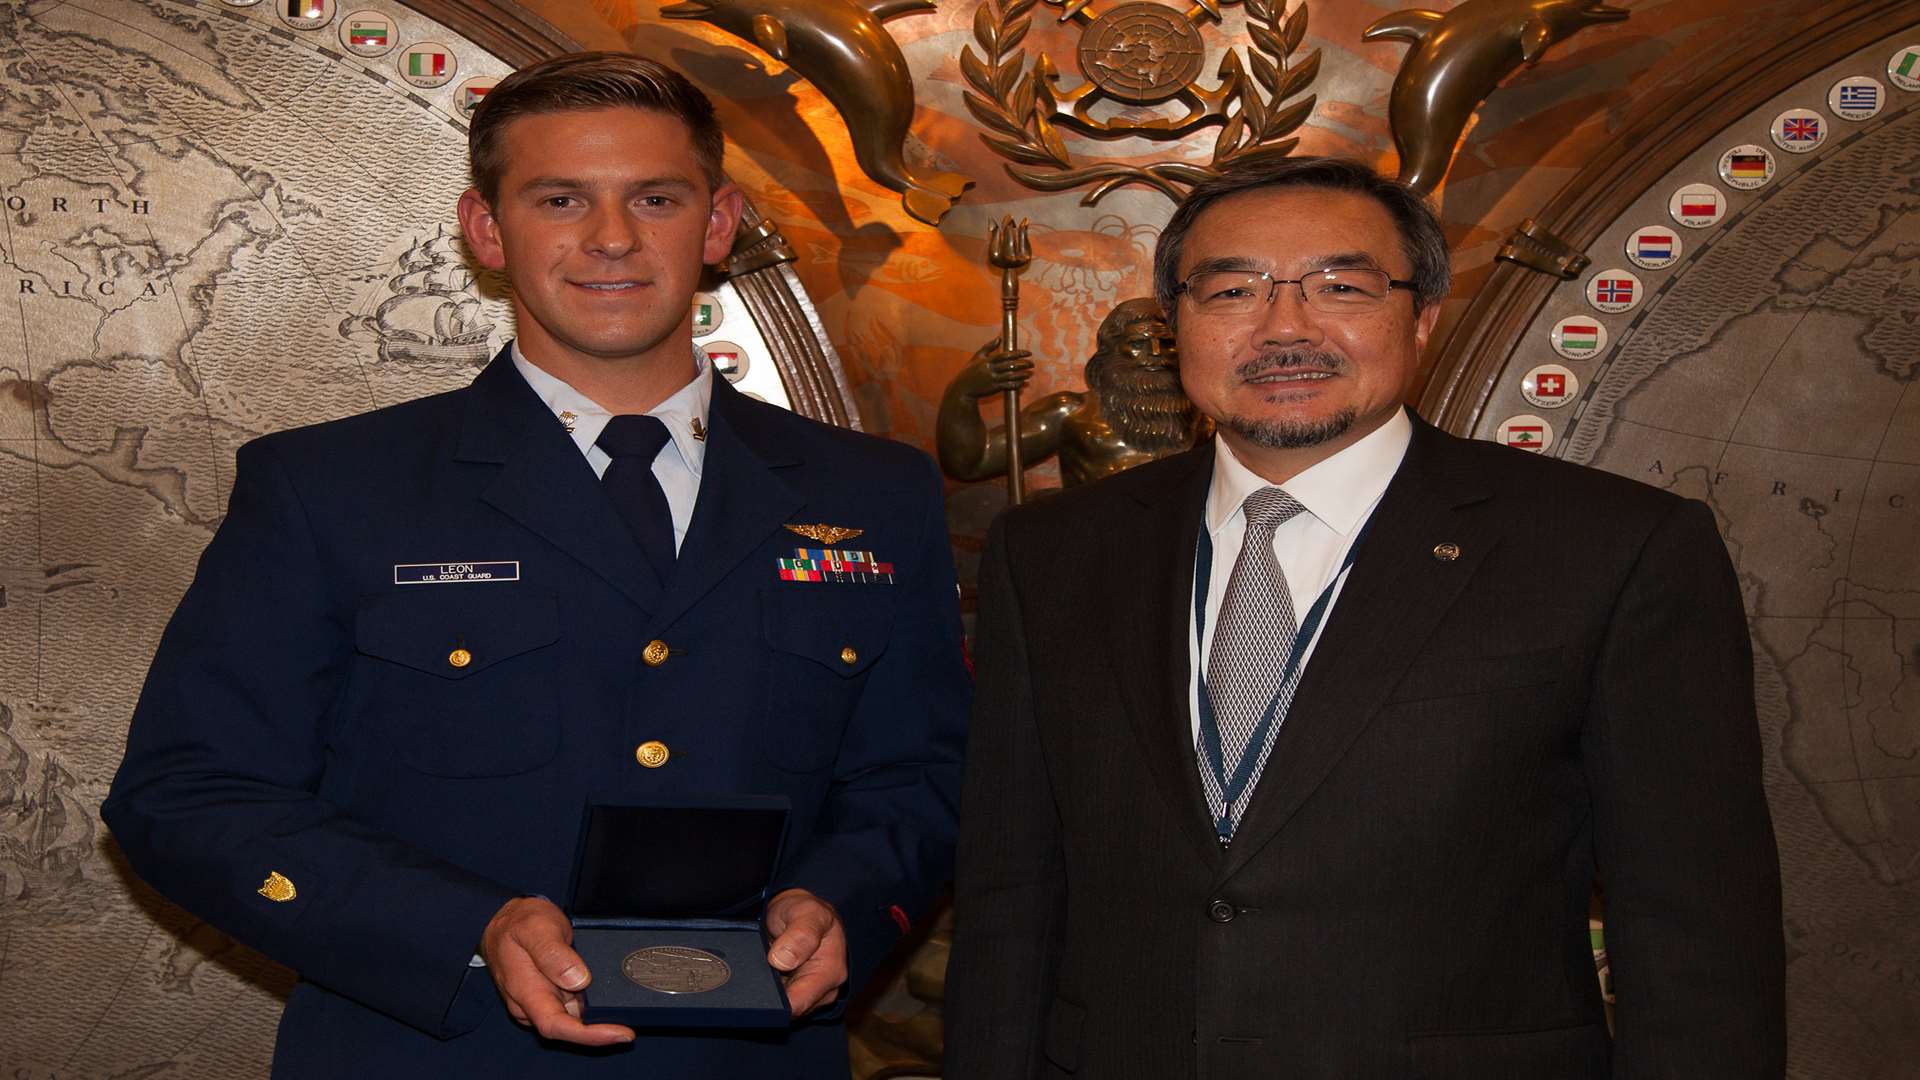 Chris receiving his award. Picture: International Maritime Organization